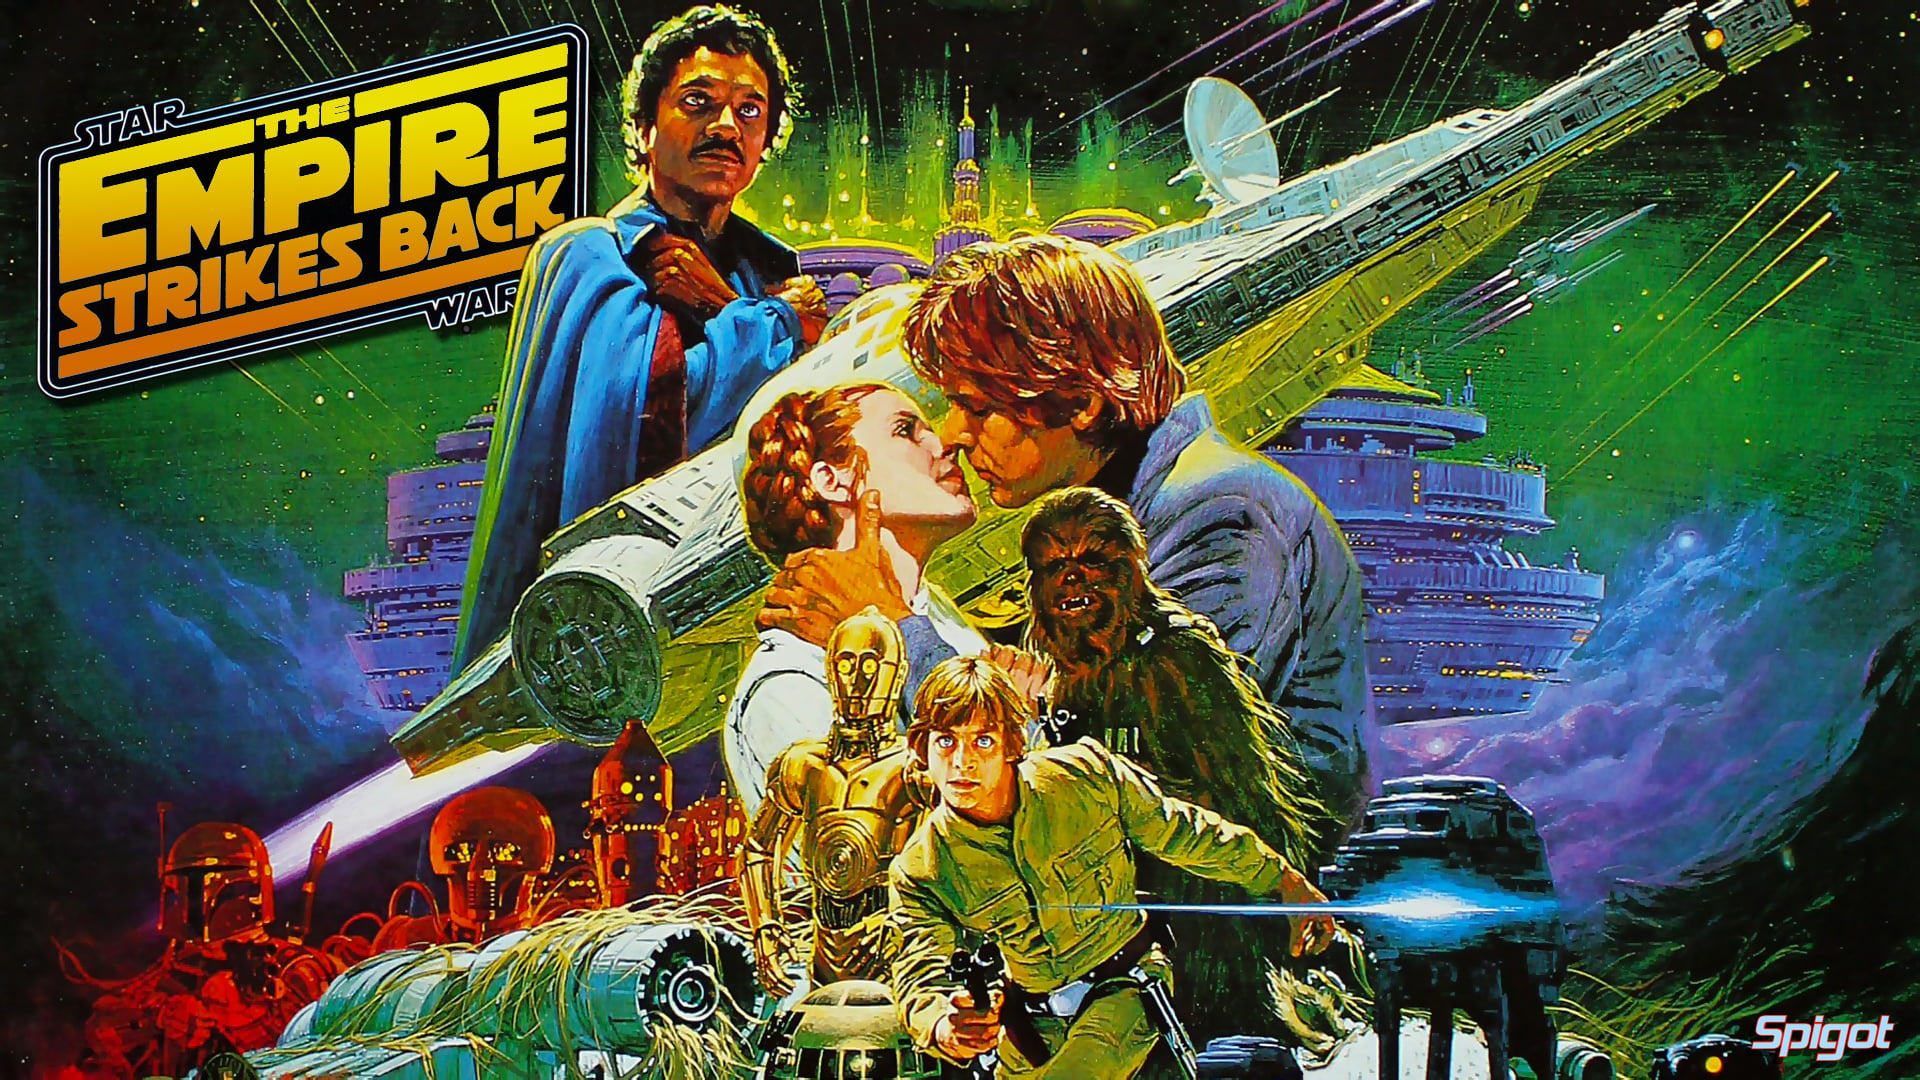 movie poster, George Spigot, Star Wars, The Empire Strikes Back